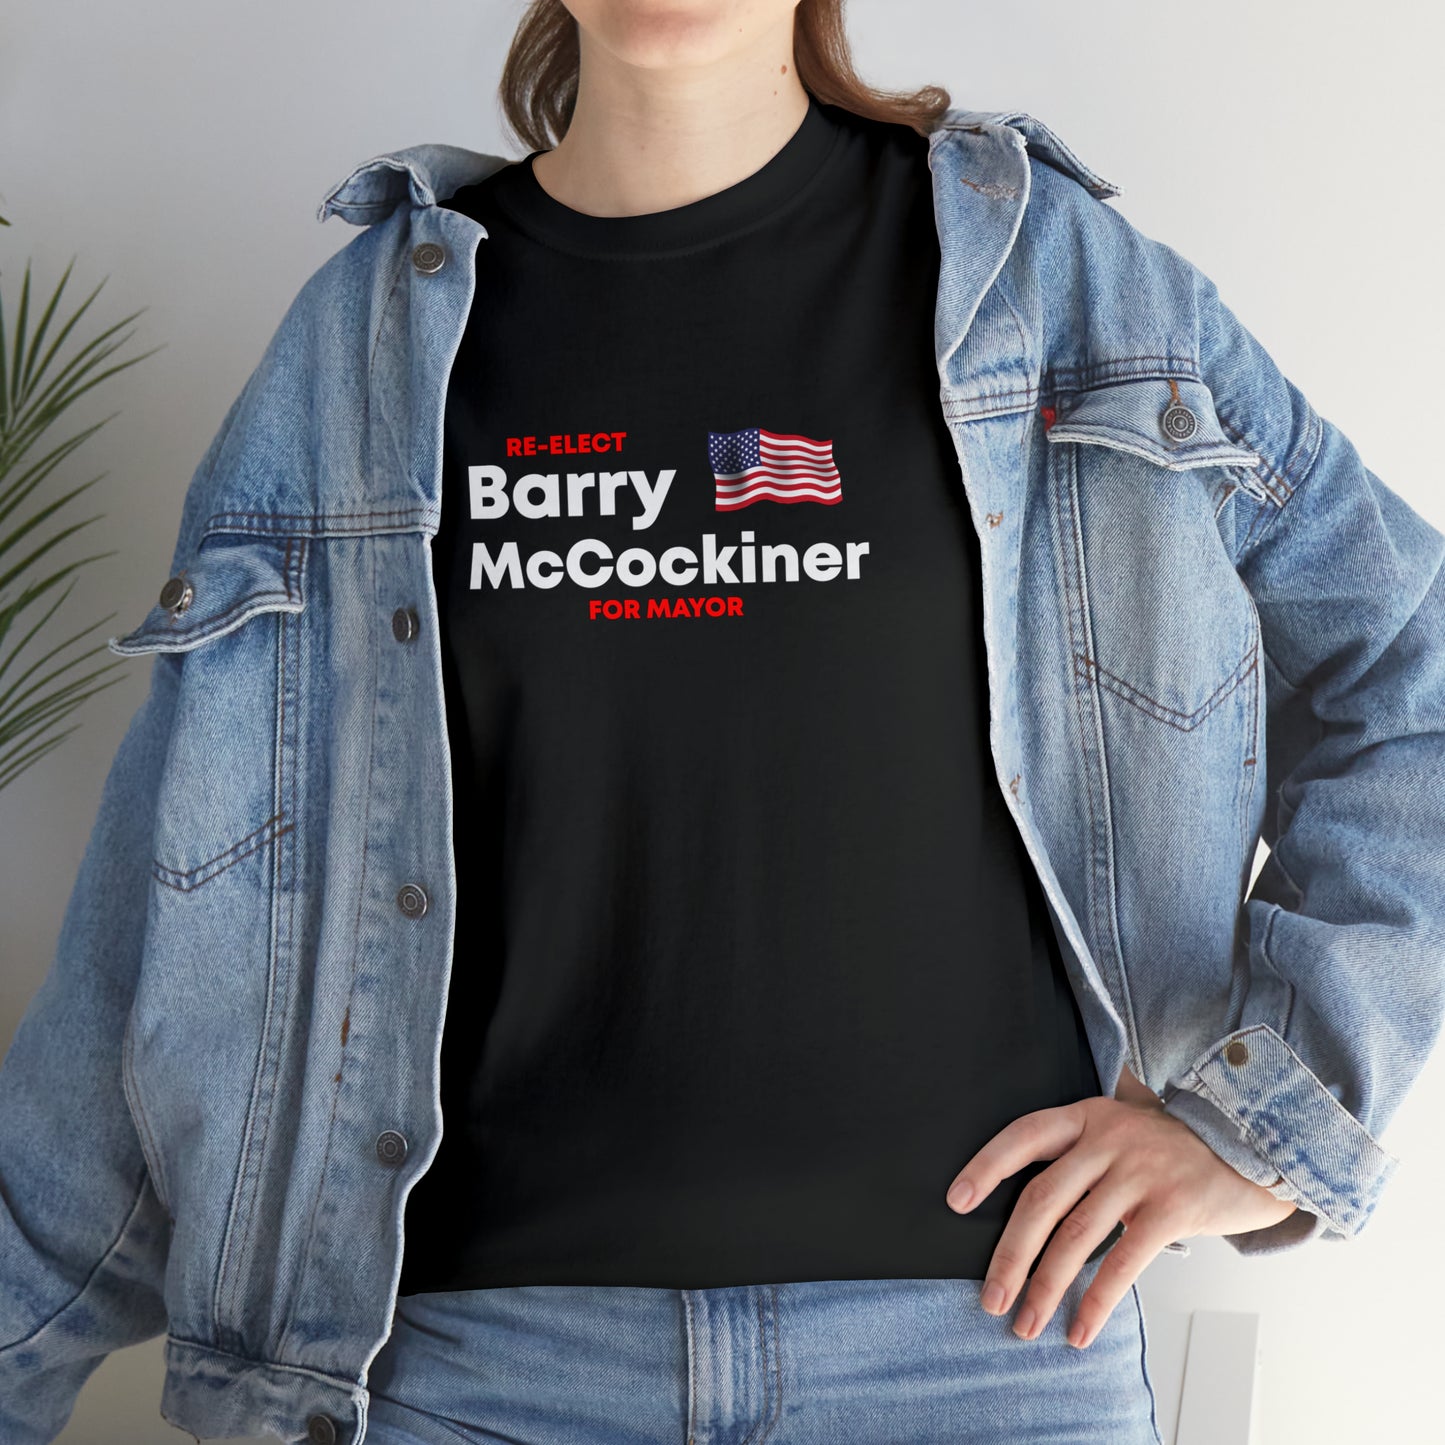 BARRY McCOCKINER T-SHIRT